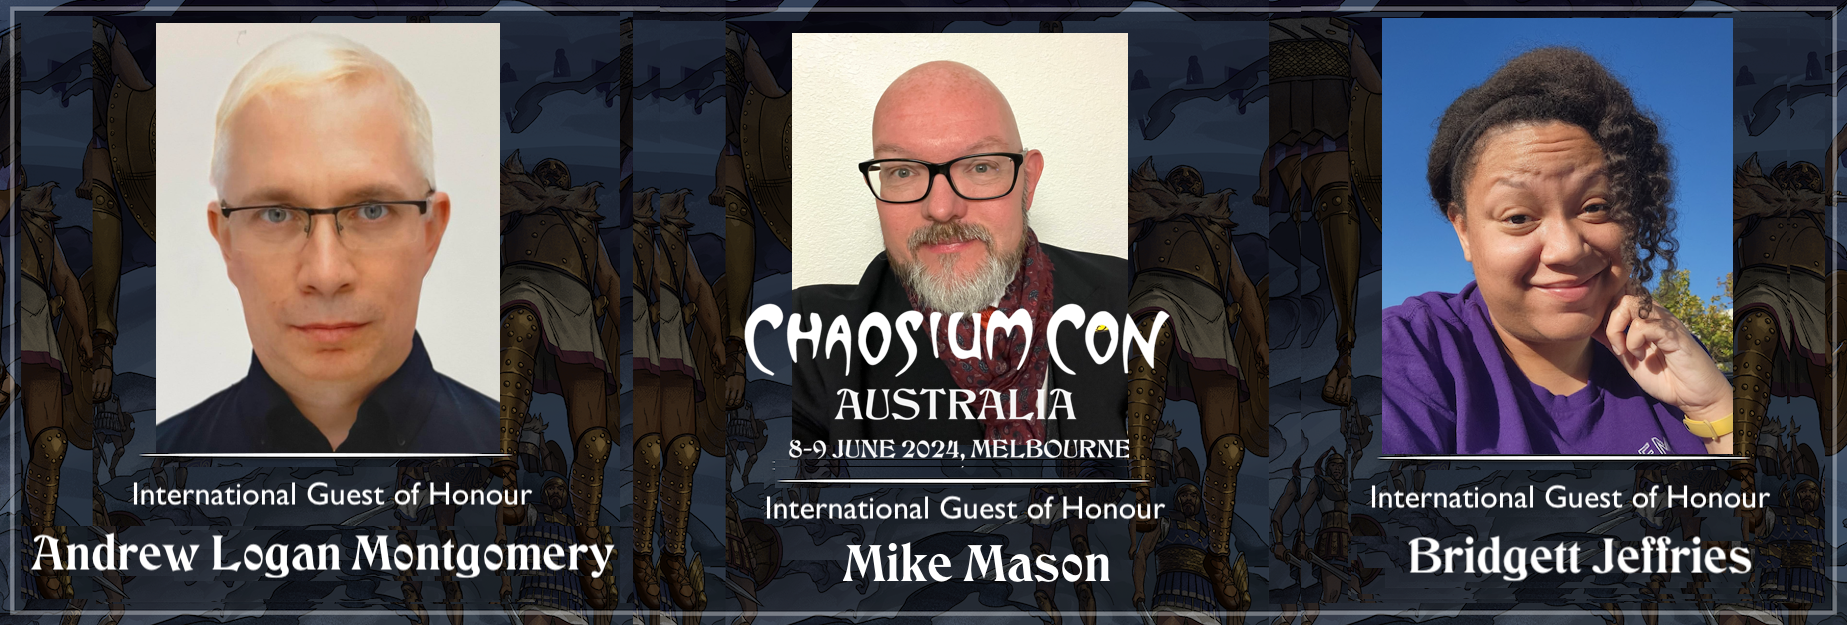 international-guests-horizontal-chaosium-con-australia.png